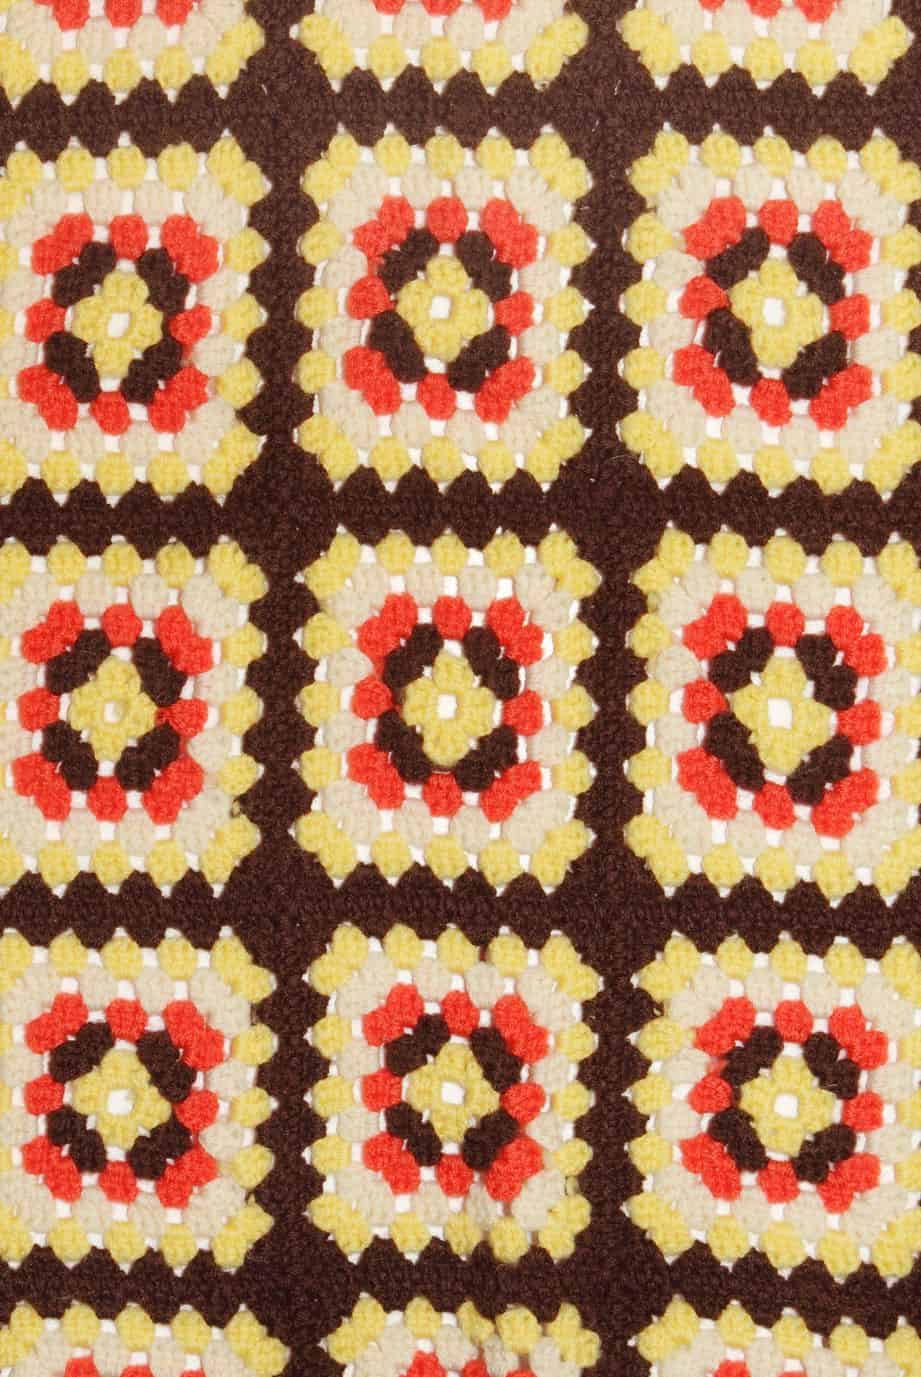 4. Crochet blankets